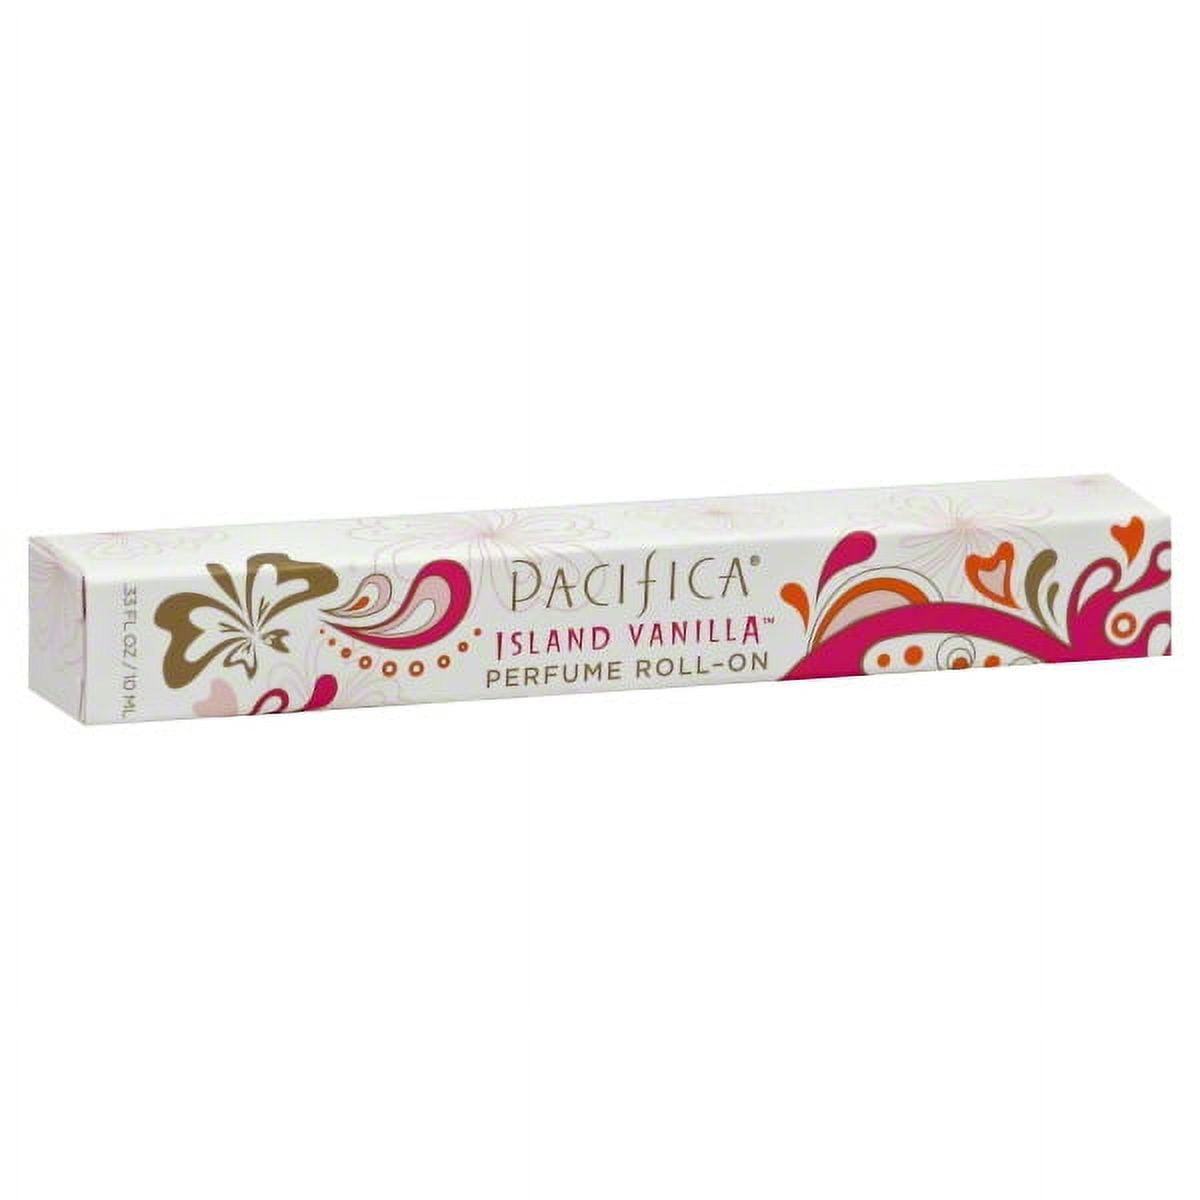 nemat vanilla musk and pacifica island vanilla make an amazing combo ✨, Pacifica Perfumes